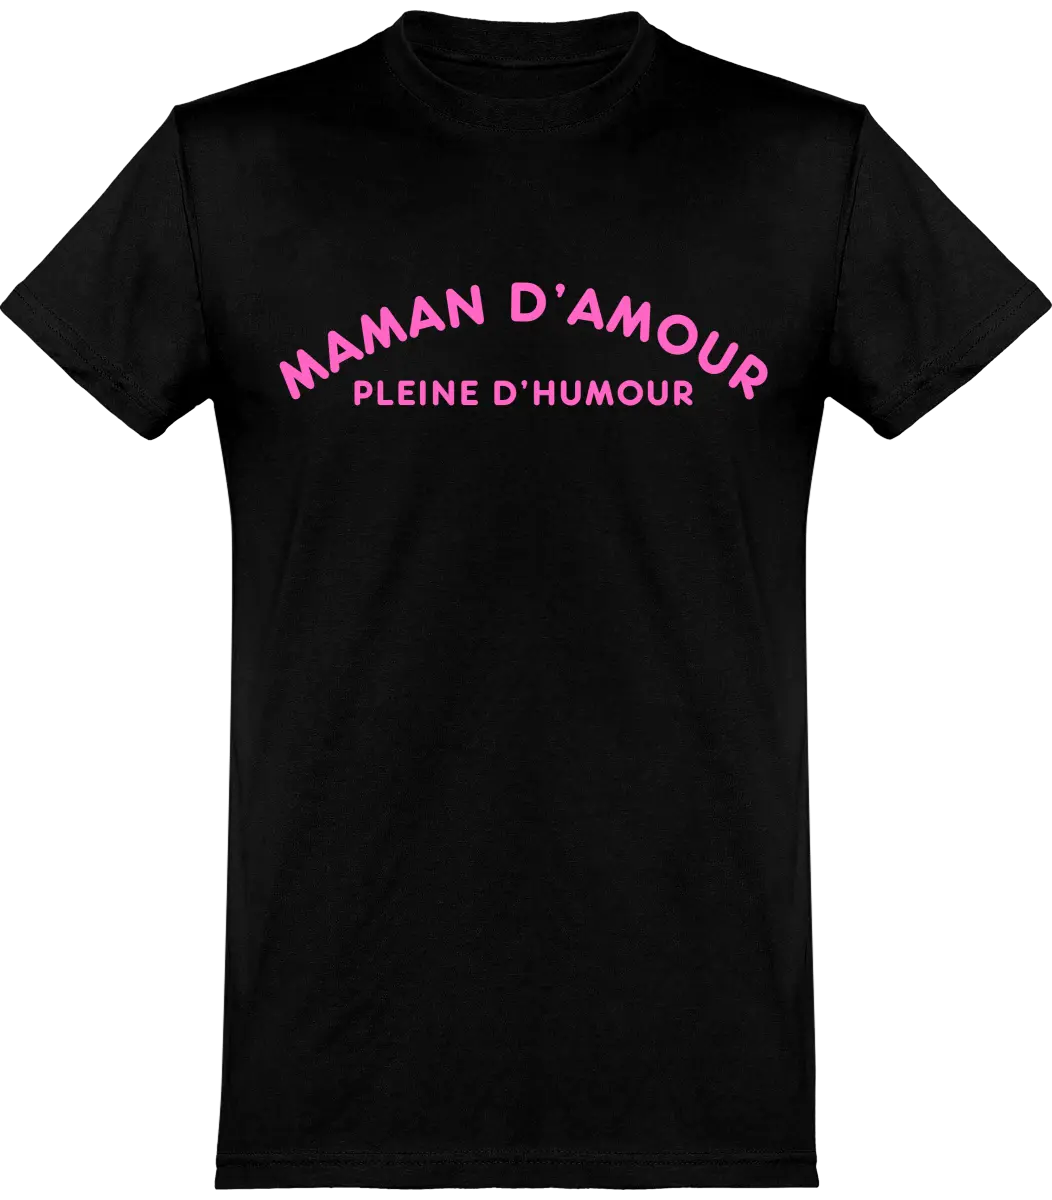 T-shirt maman "Maman d'amour pleine d'humour" | Mixte - French Humour